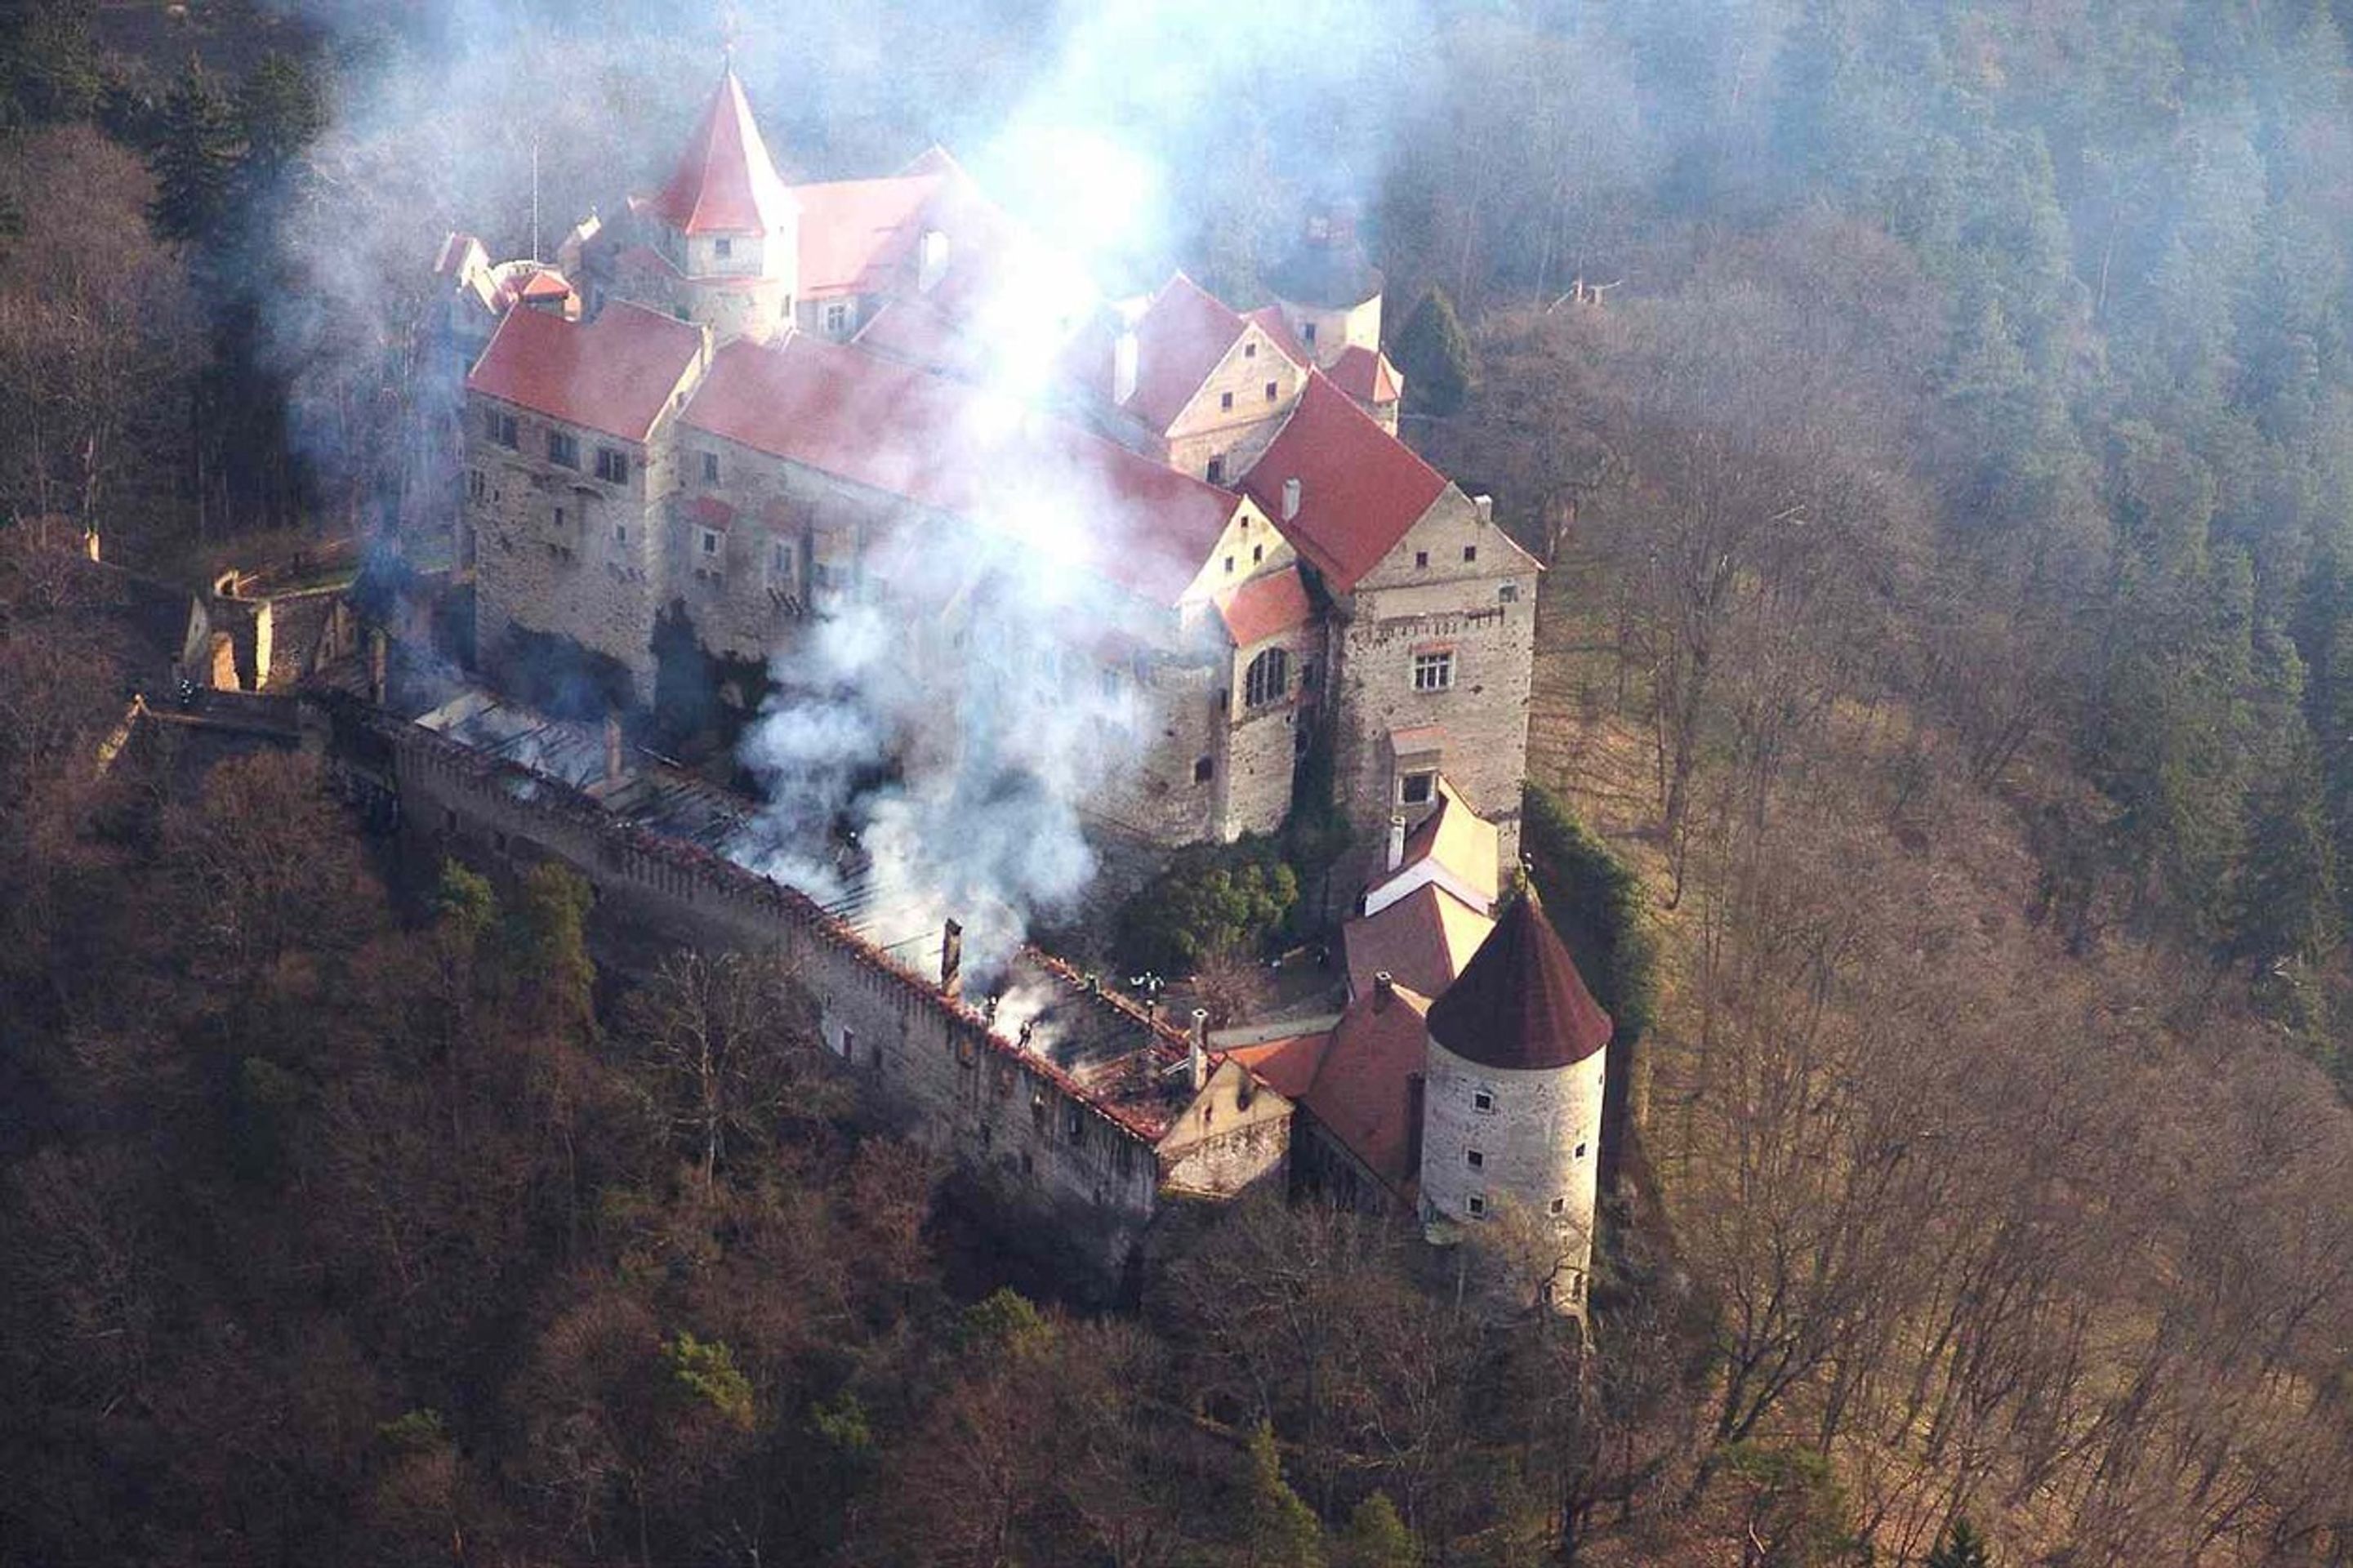 Požár hradu Pernštejn (2005) - GALERIE: Tragické události 15. dubna (5/8)